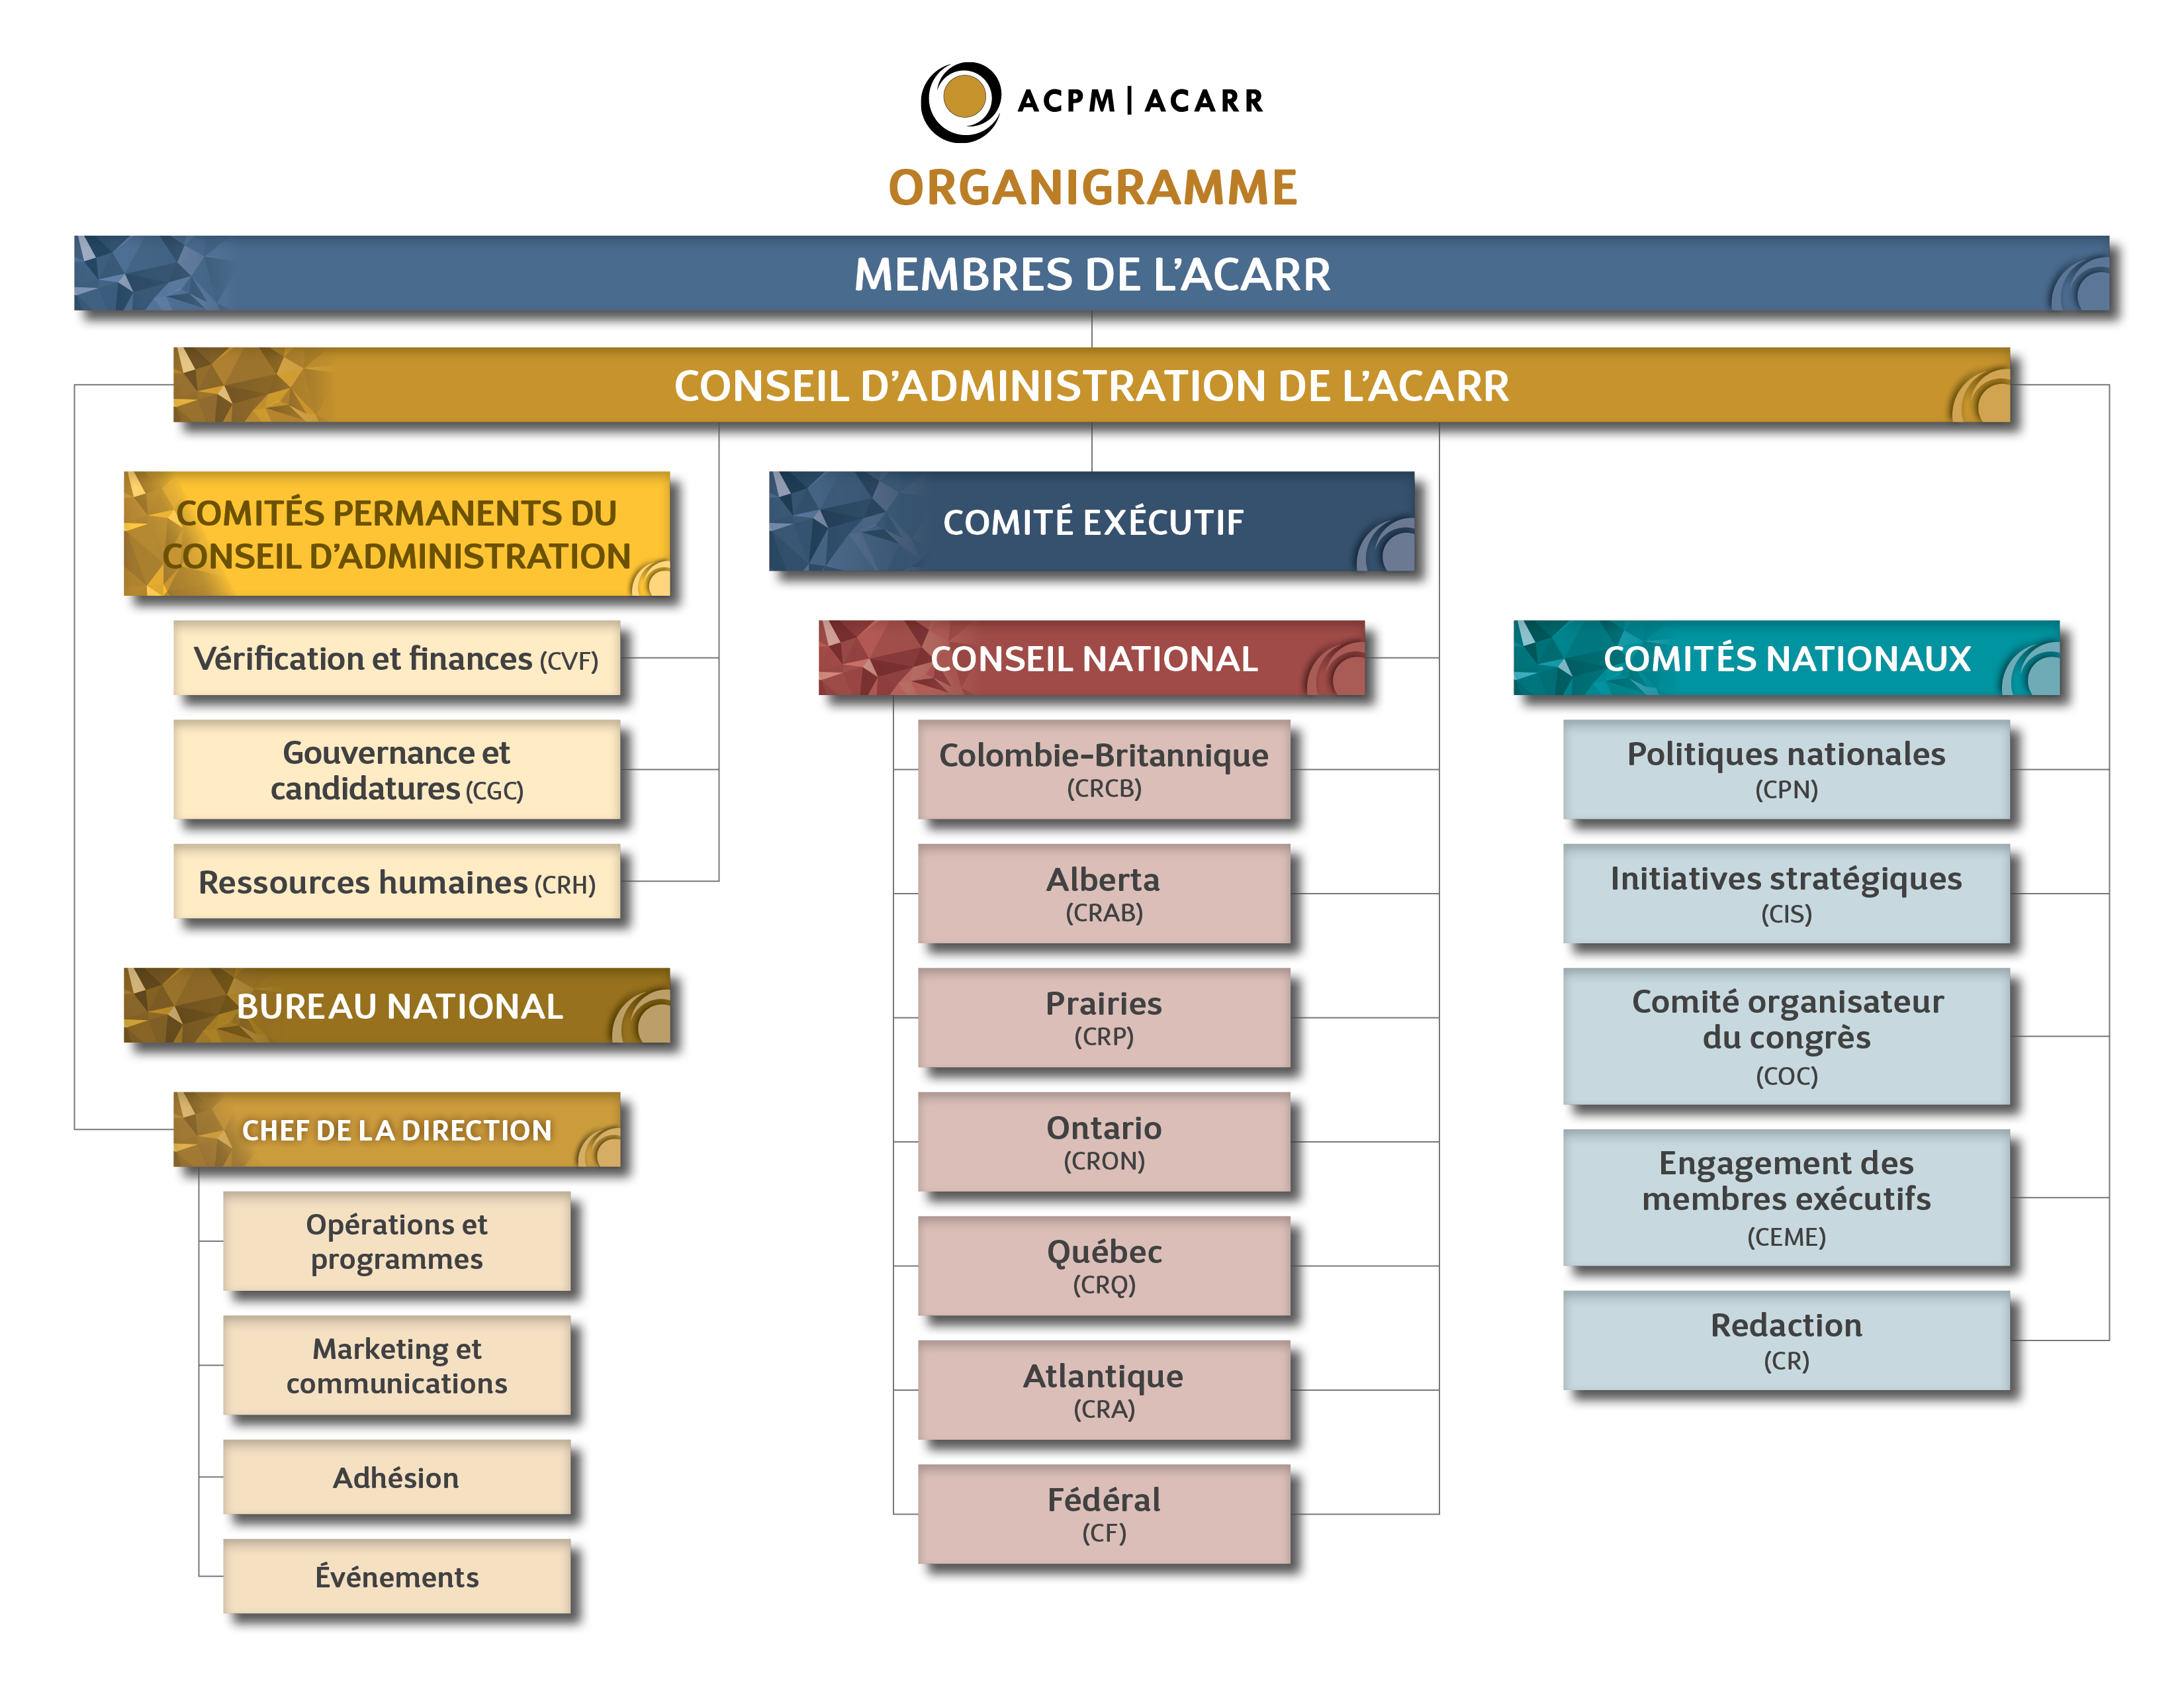 ACPM Organization Chart